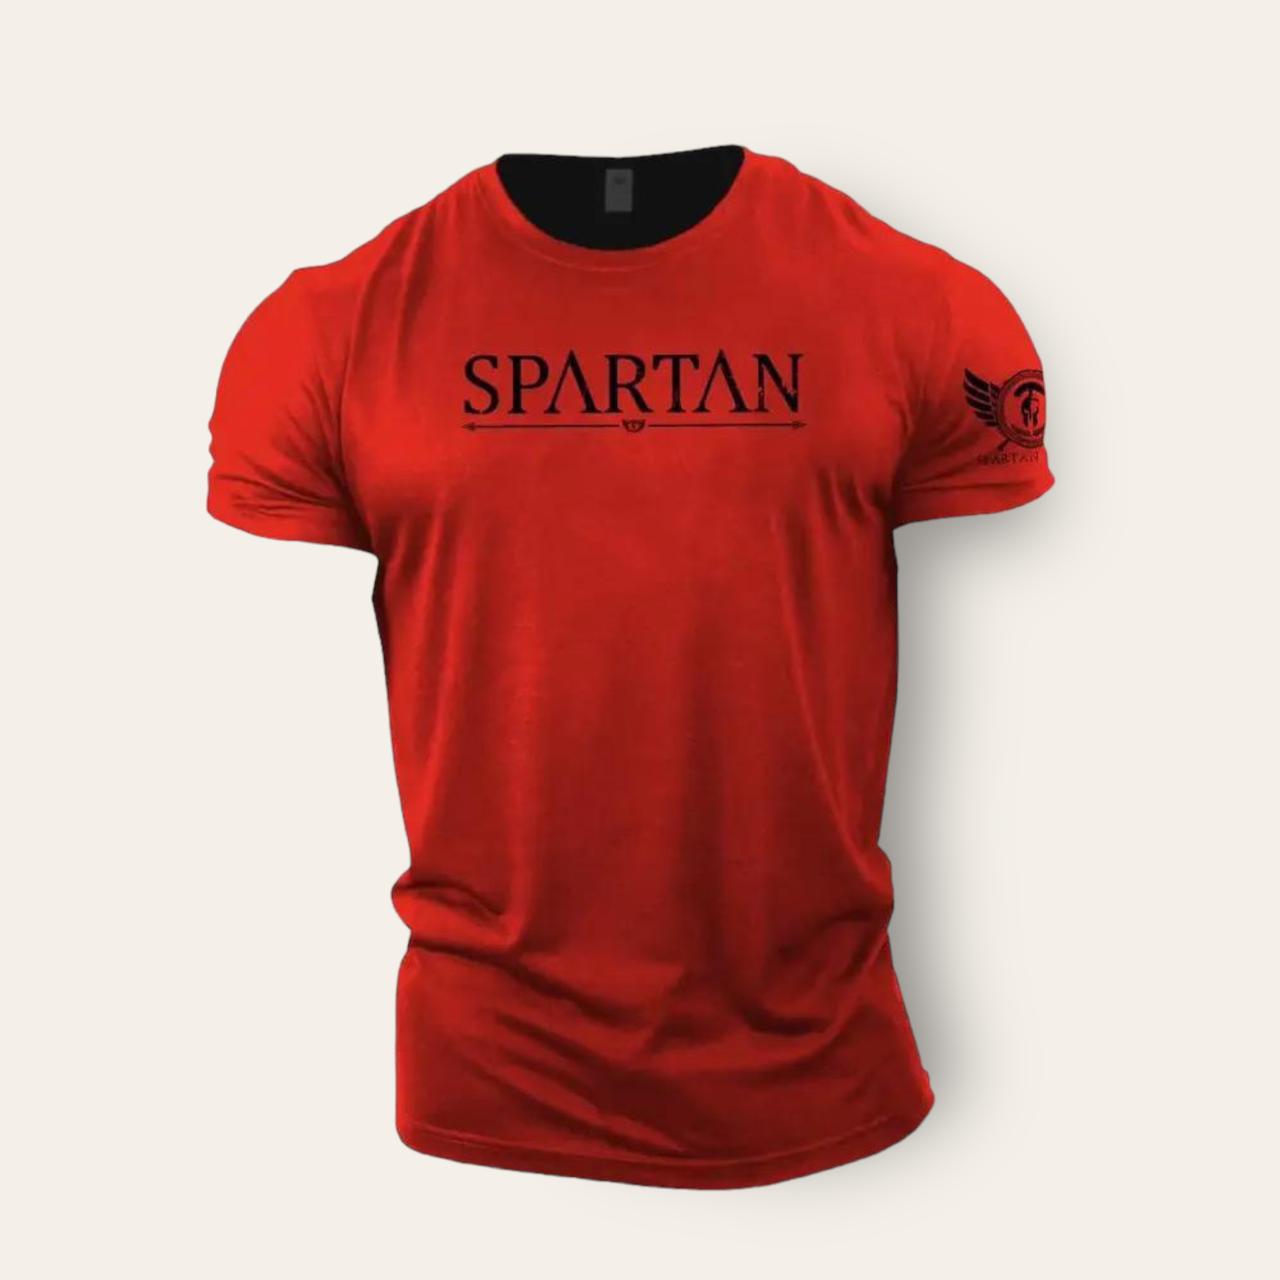 Spartan Slogan Graphic T-Shirt